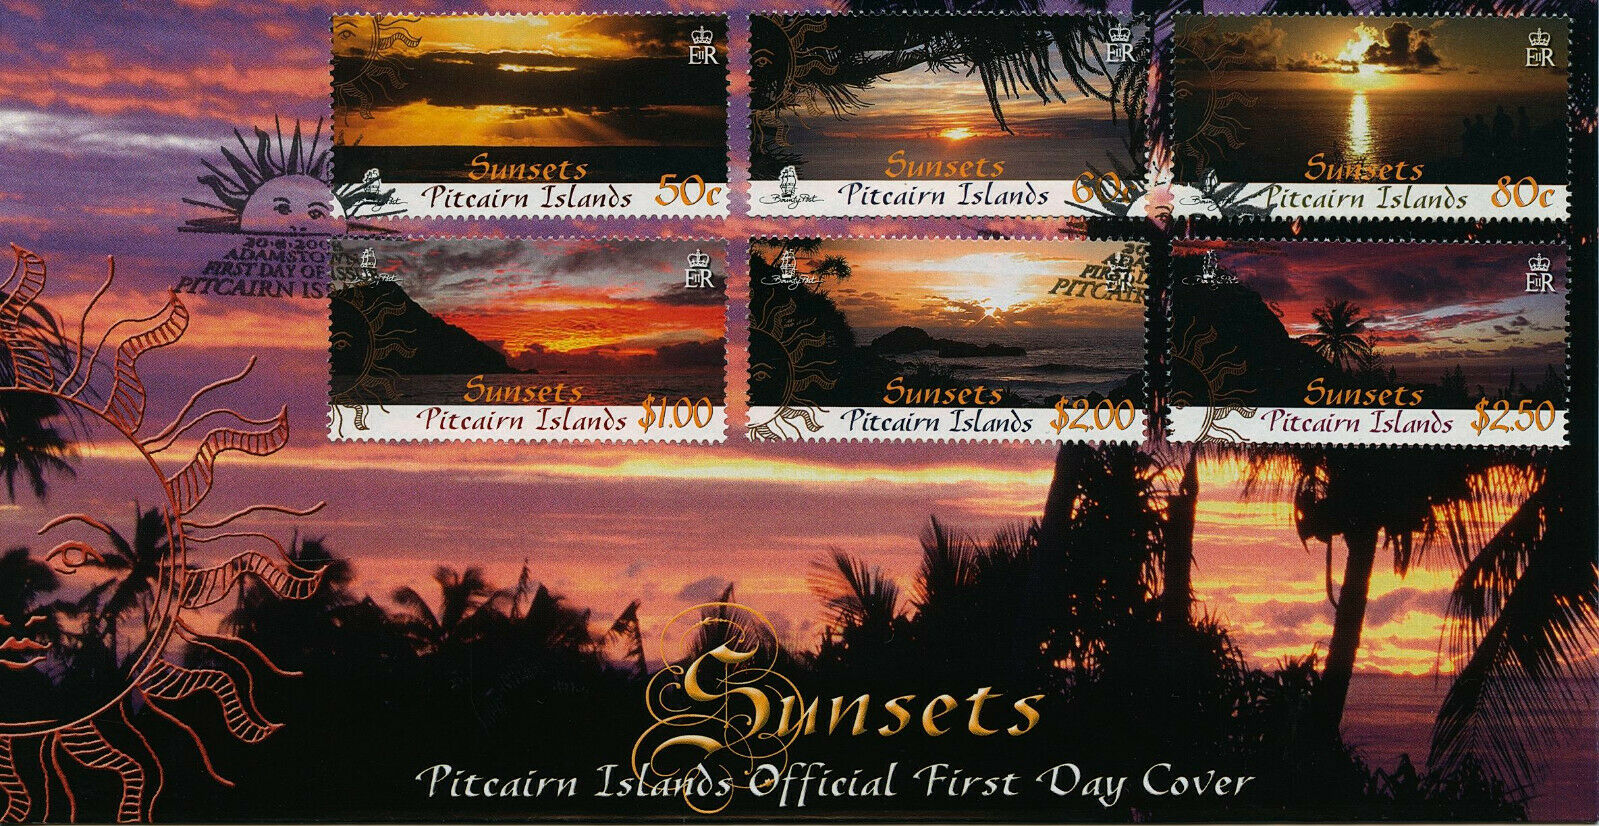 Pitcairn Islands 2008 FDC Landscapes Stamps Sunsets Tourism Palm Trees 6v Set